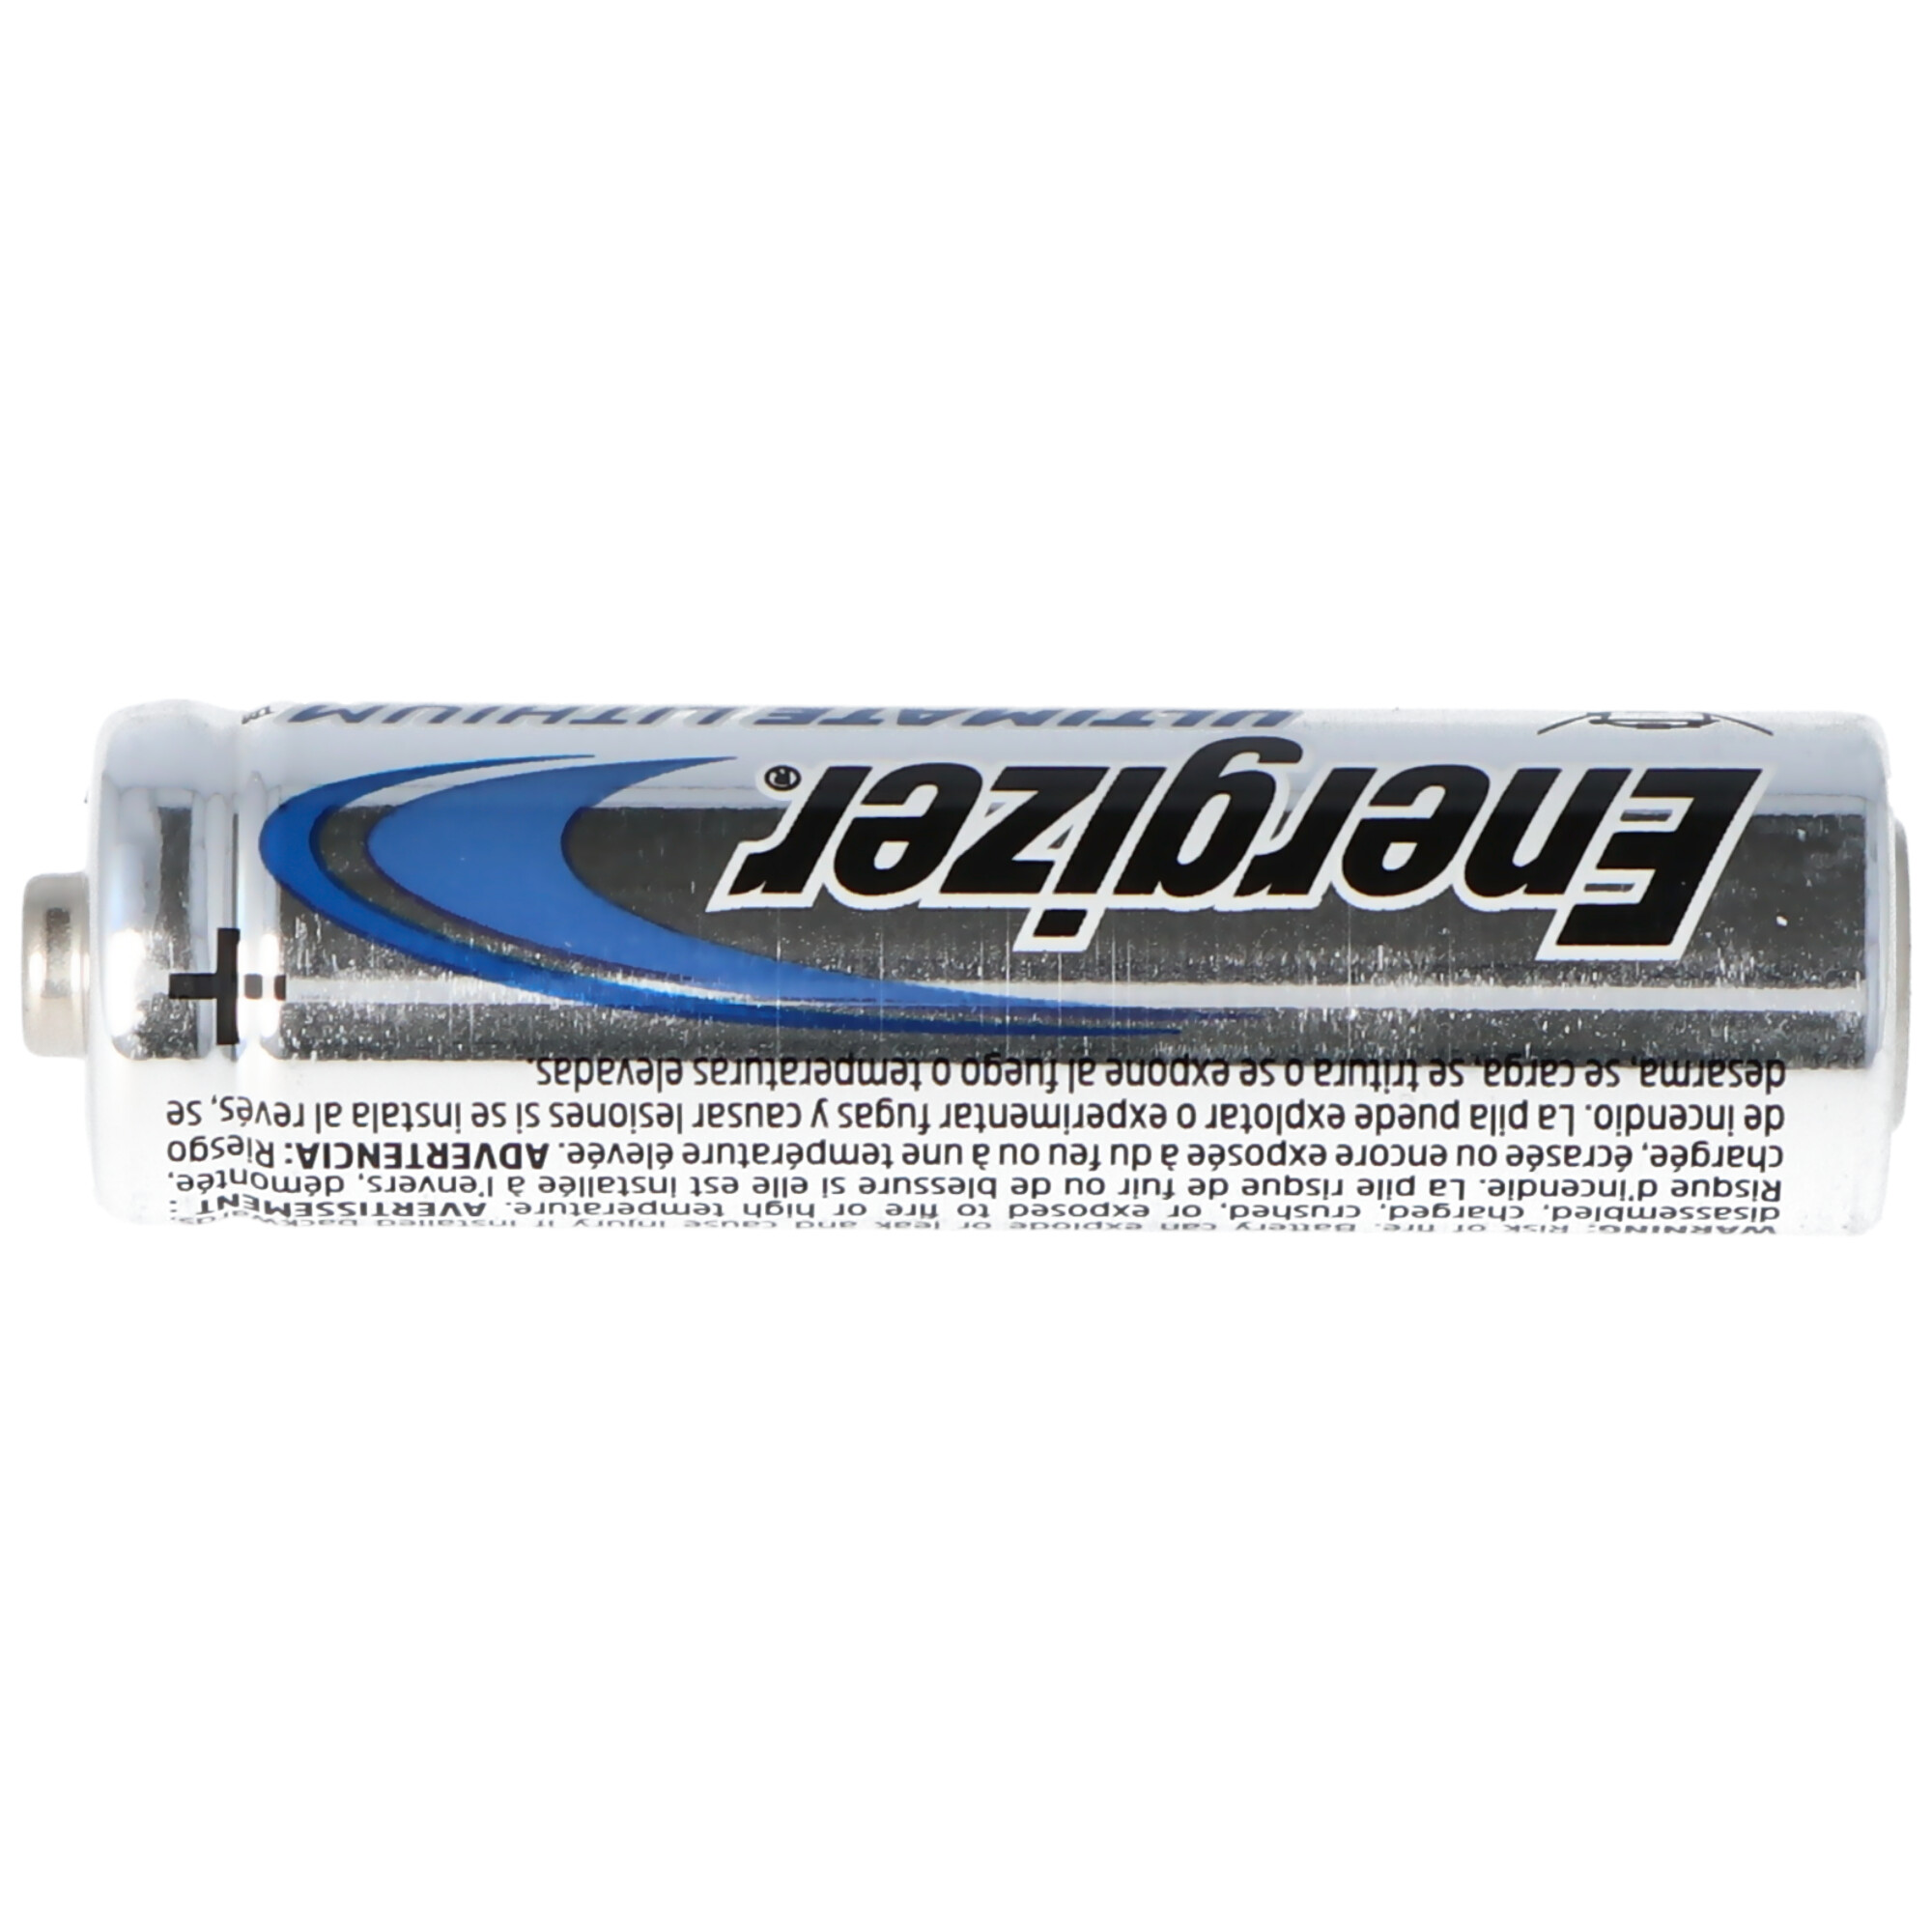 Energizer L91 Lithium Batterie AA 1,5 Volt, 3000mAh 2er Blister